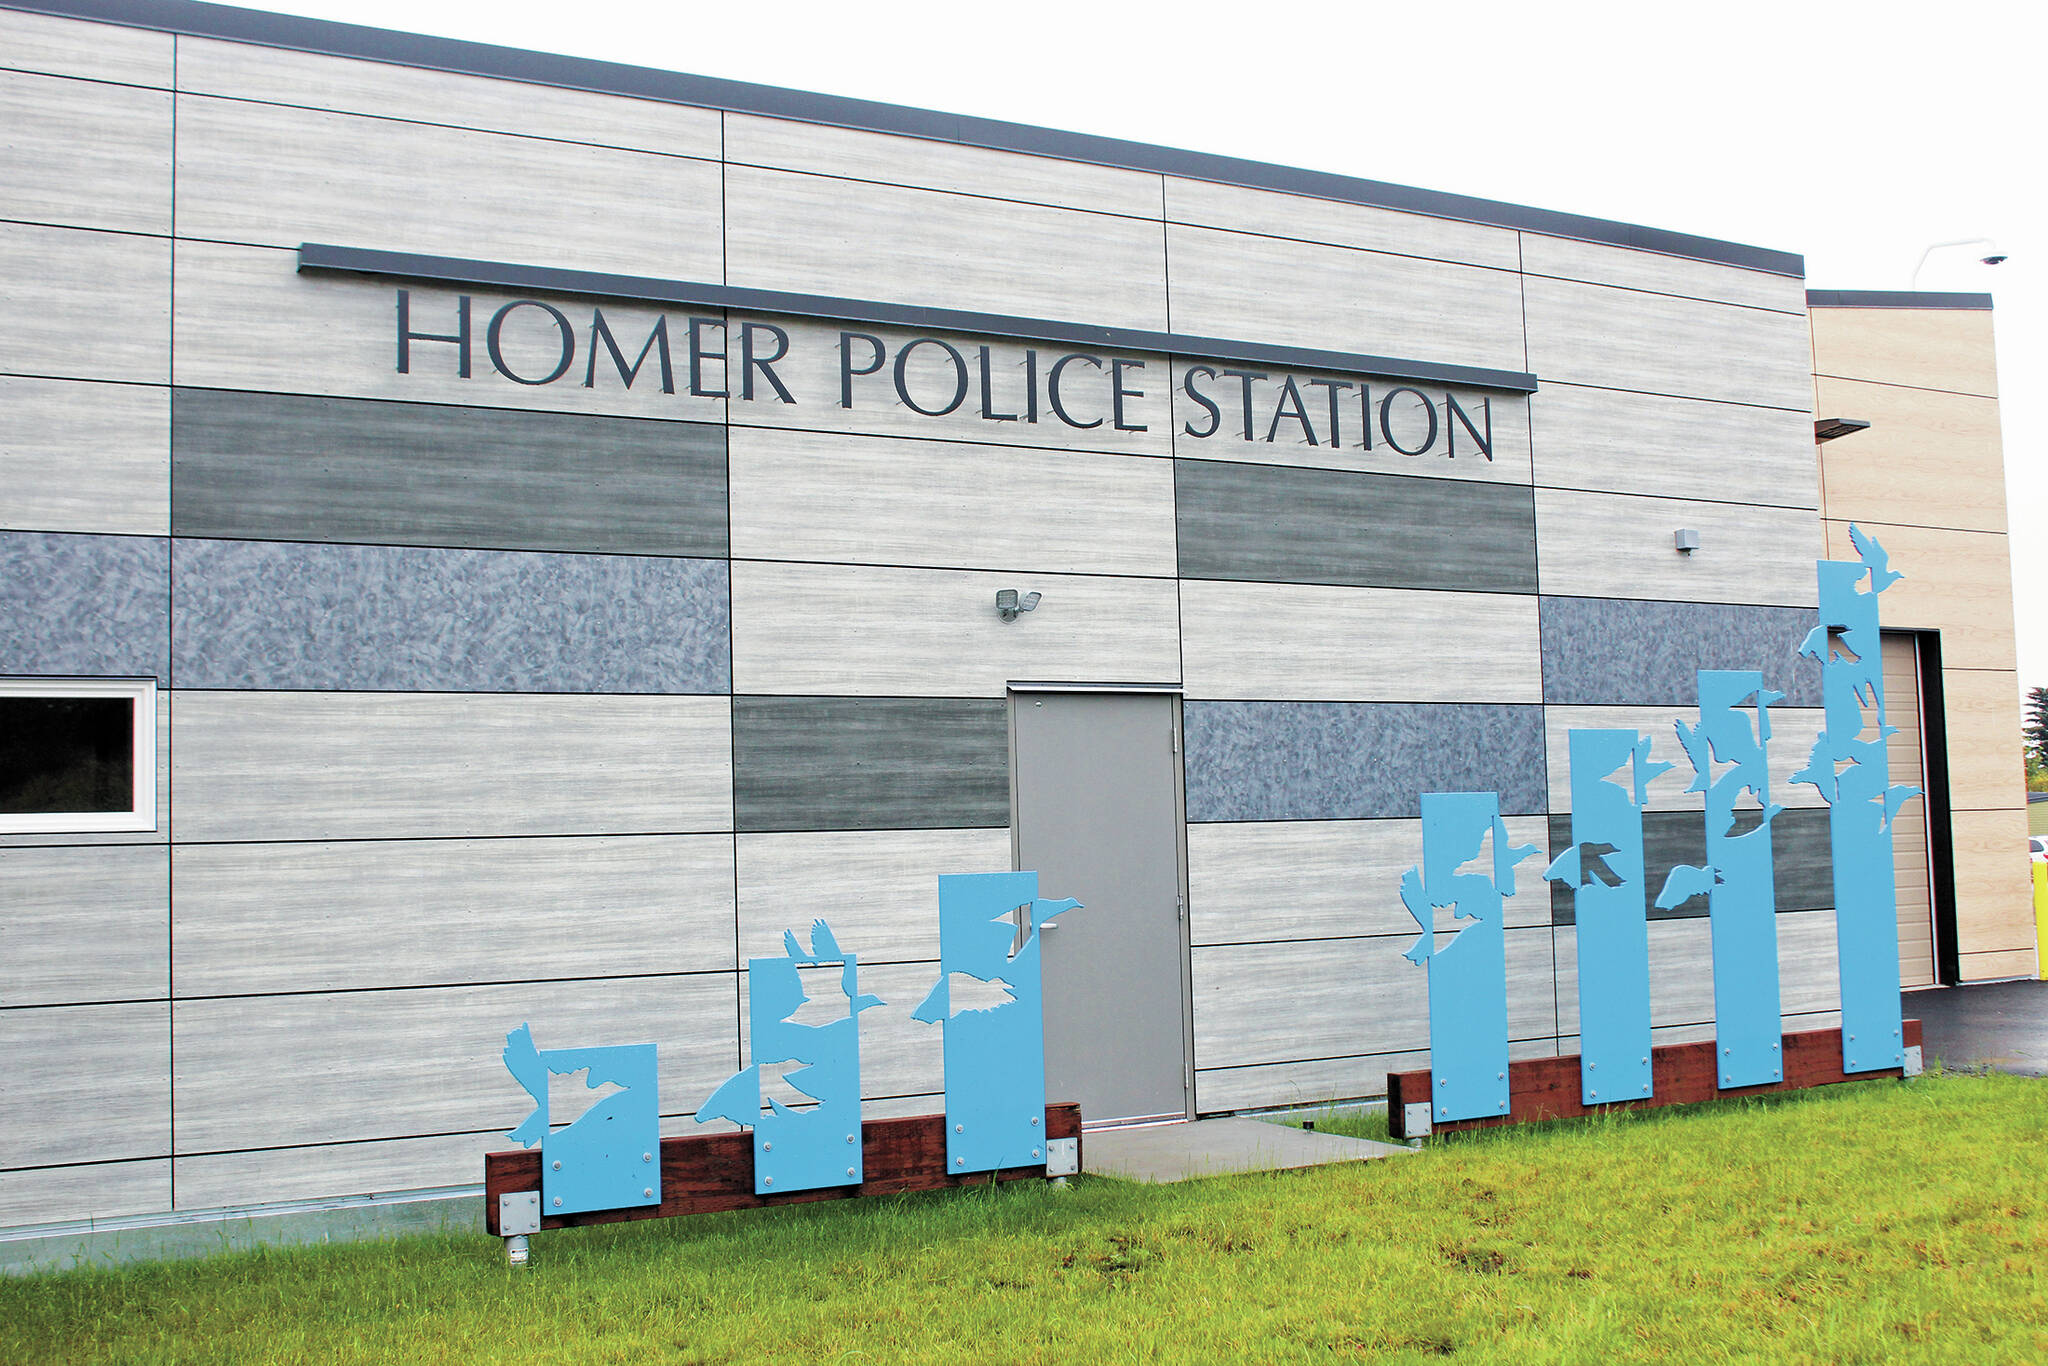 The Homer Police Station as seen Thursday, Sept. 24, 2020, in Homer, Alaska. (Photo by Megan Pacer/Homer News)